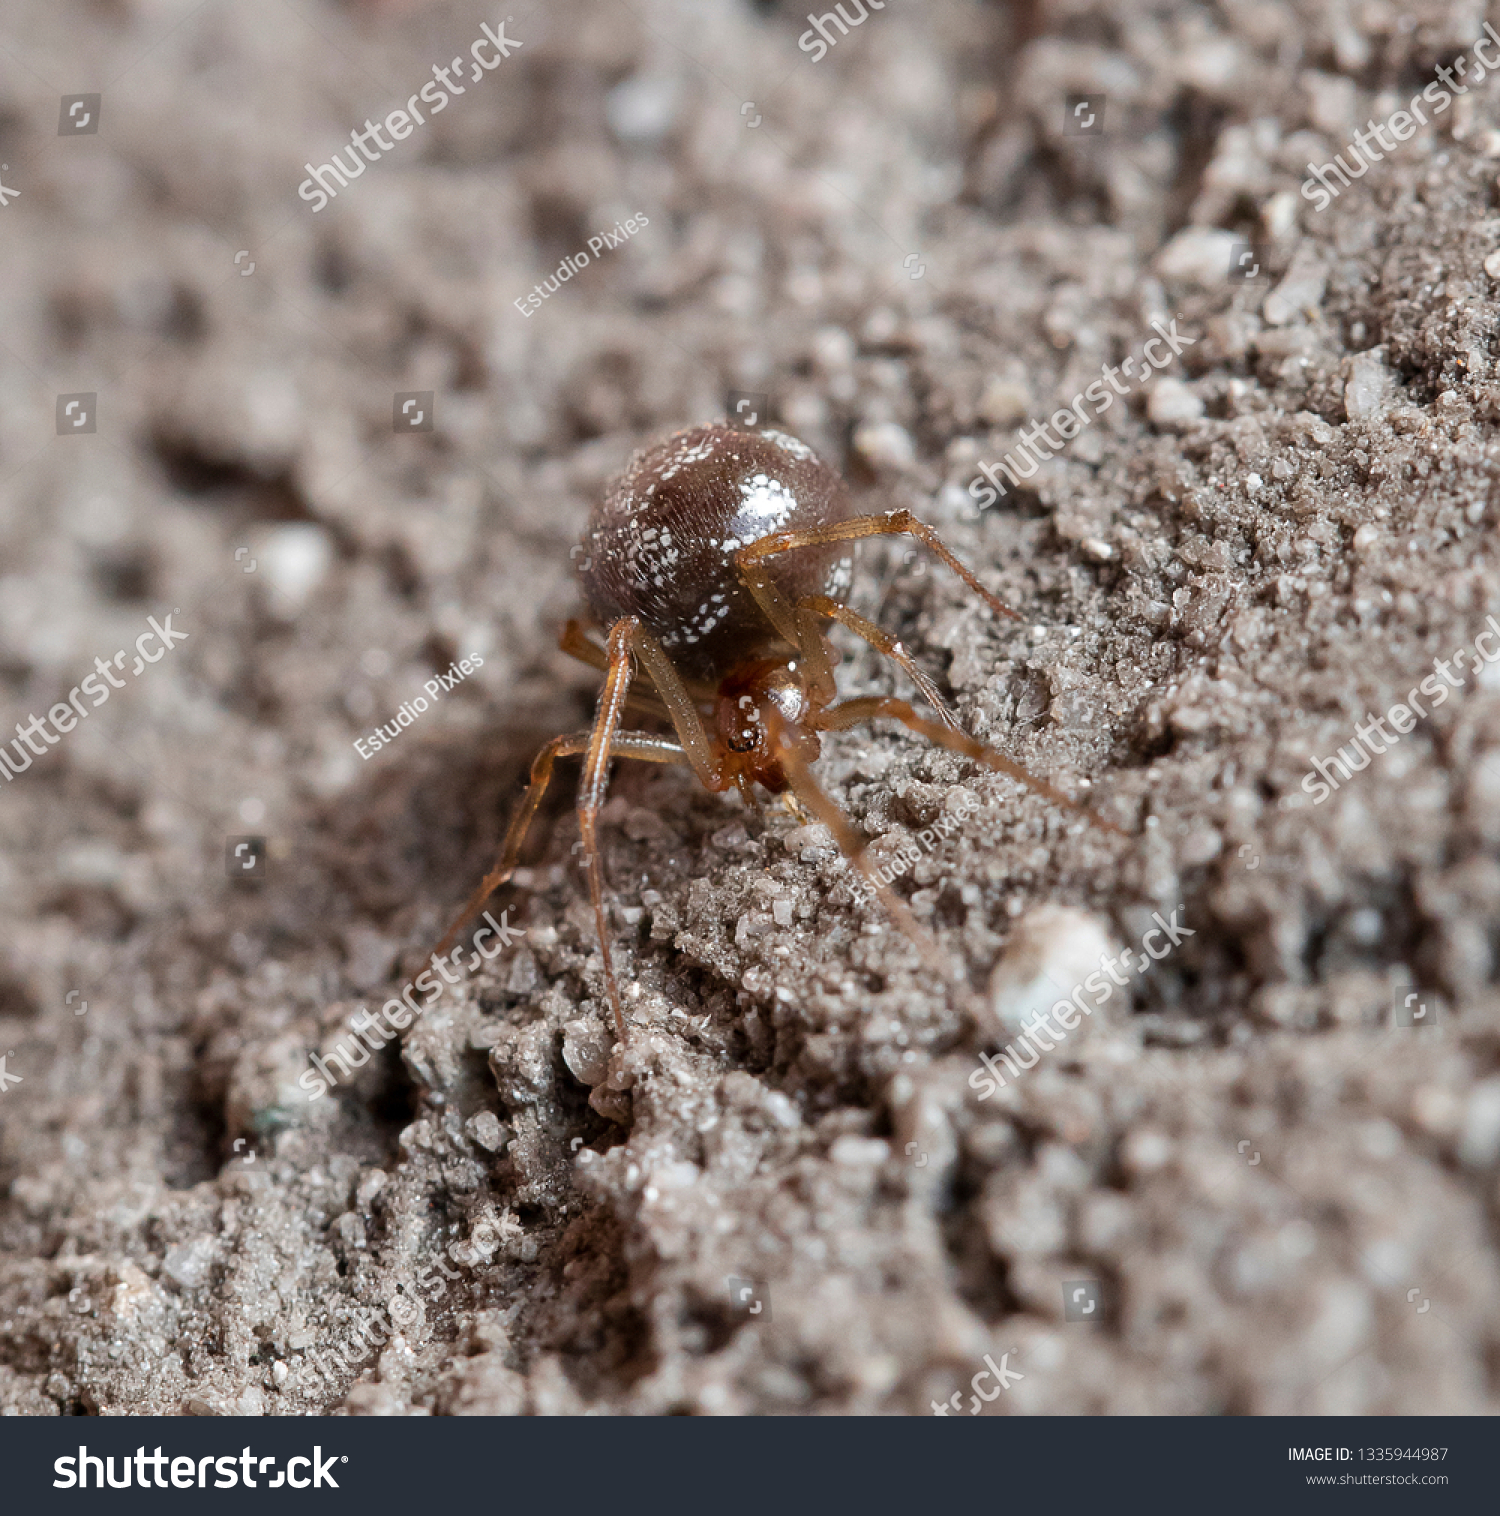 Spider arthropod invertebrate #1335944987